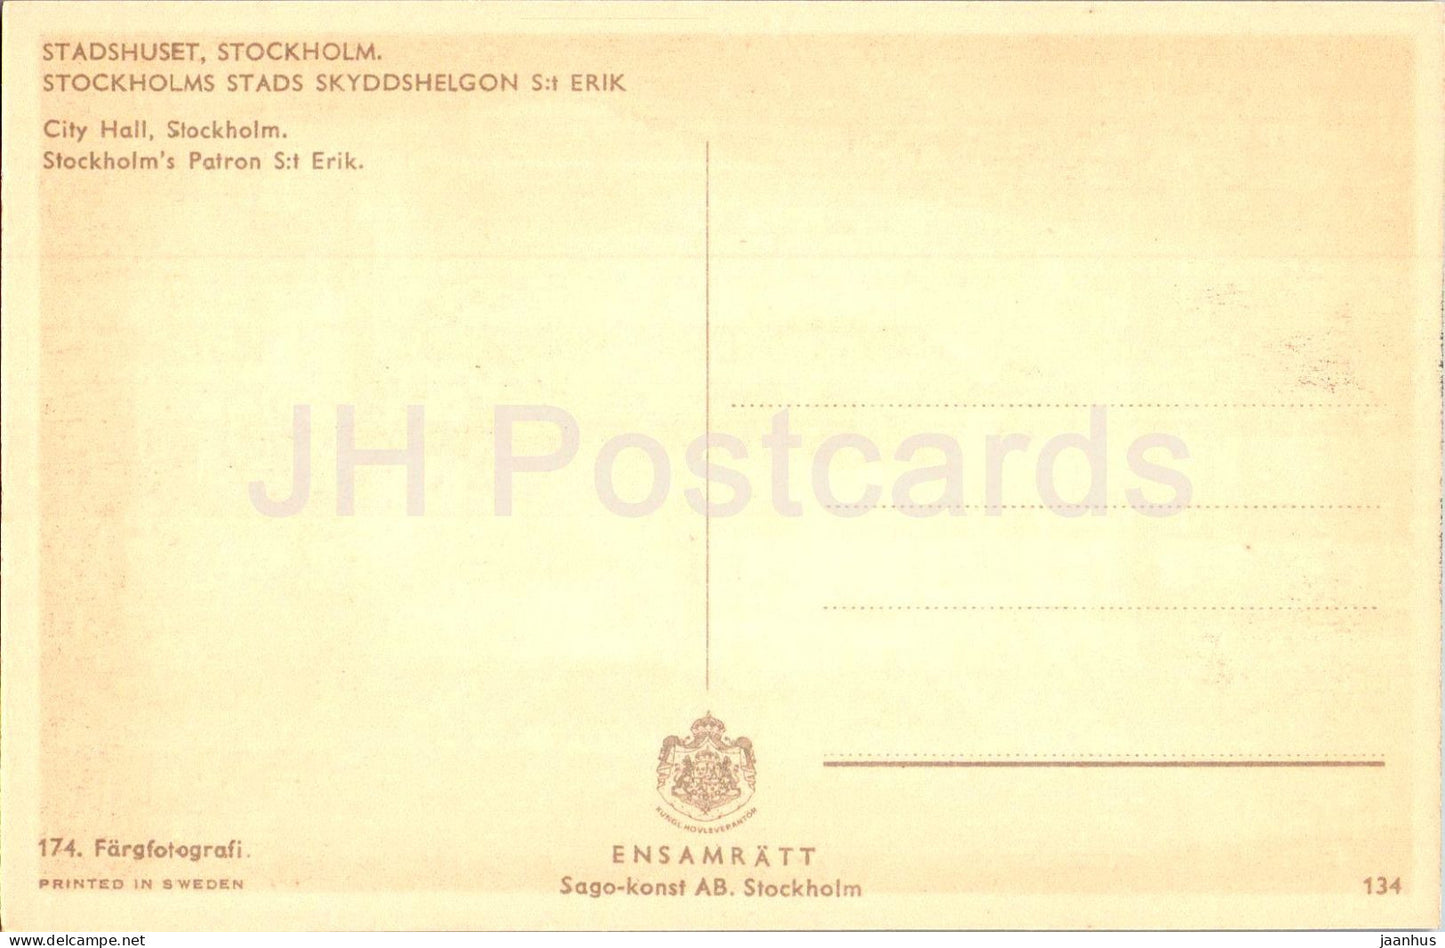 Stockholm - Stadshuset - Stockholms stads Skyddshelgon St. Erik - Patron - 134 - alte Postkarte - Schweden - unbenutzt 